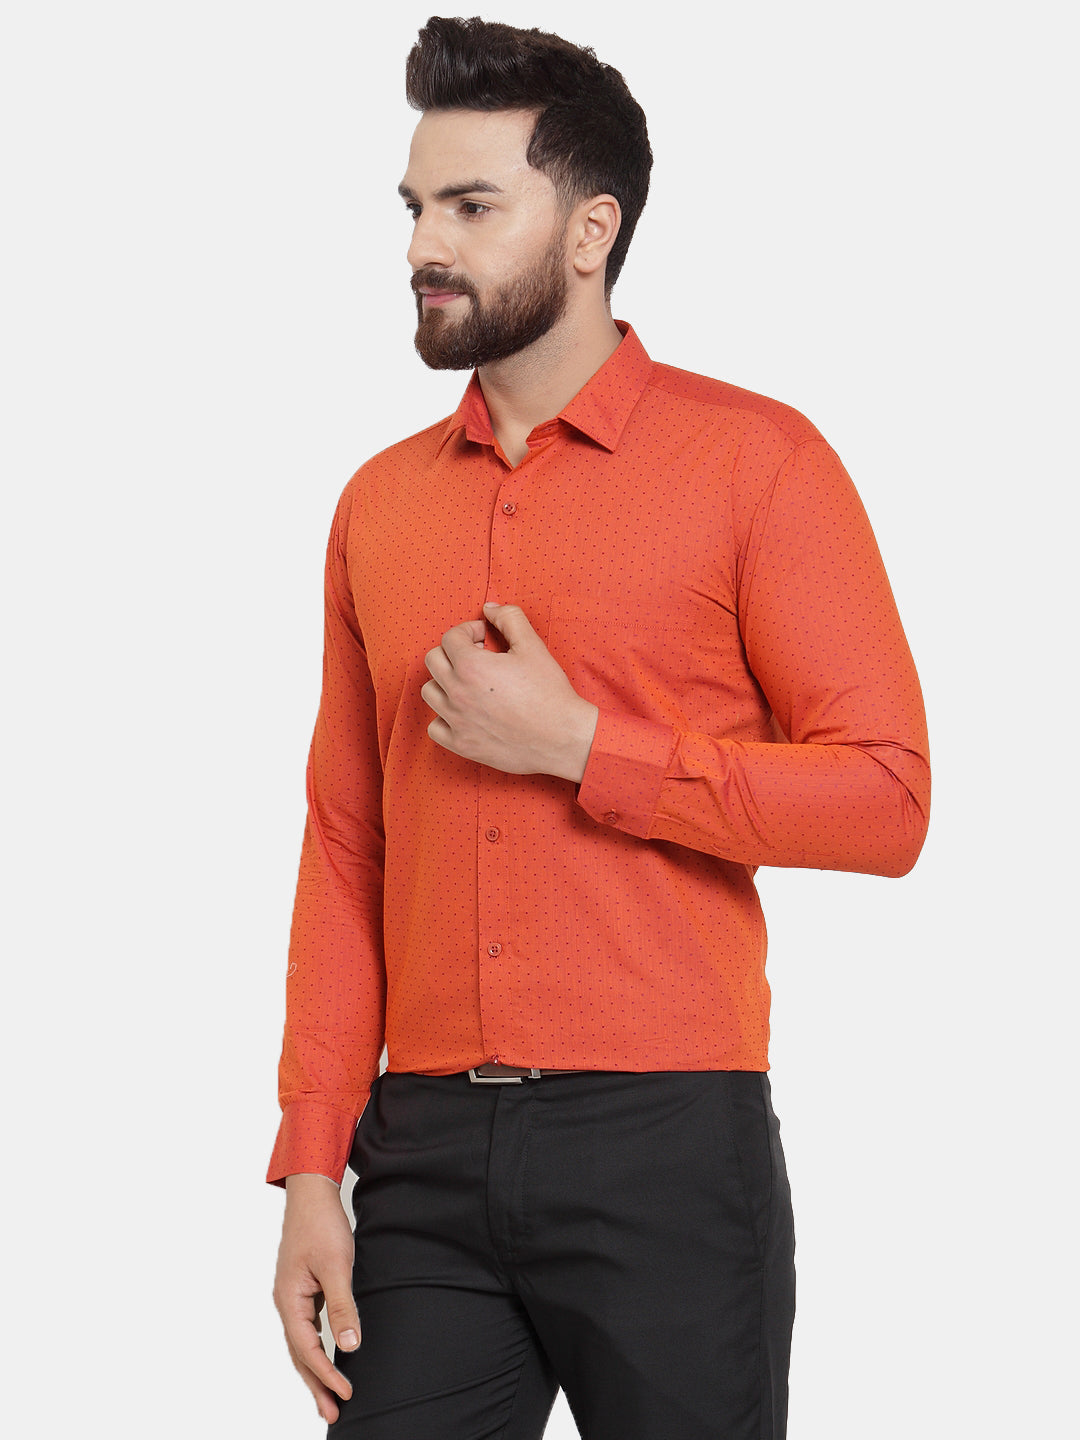 Jainish Orange Men's Cotton Polka Dots Formal Shirts